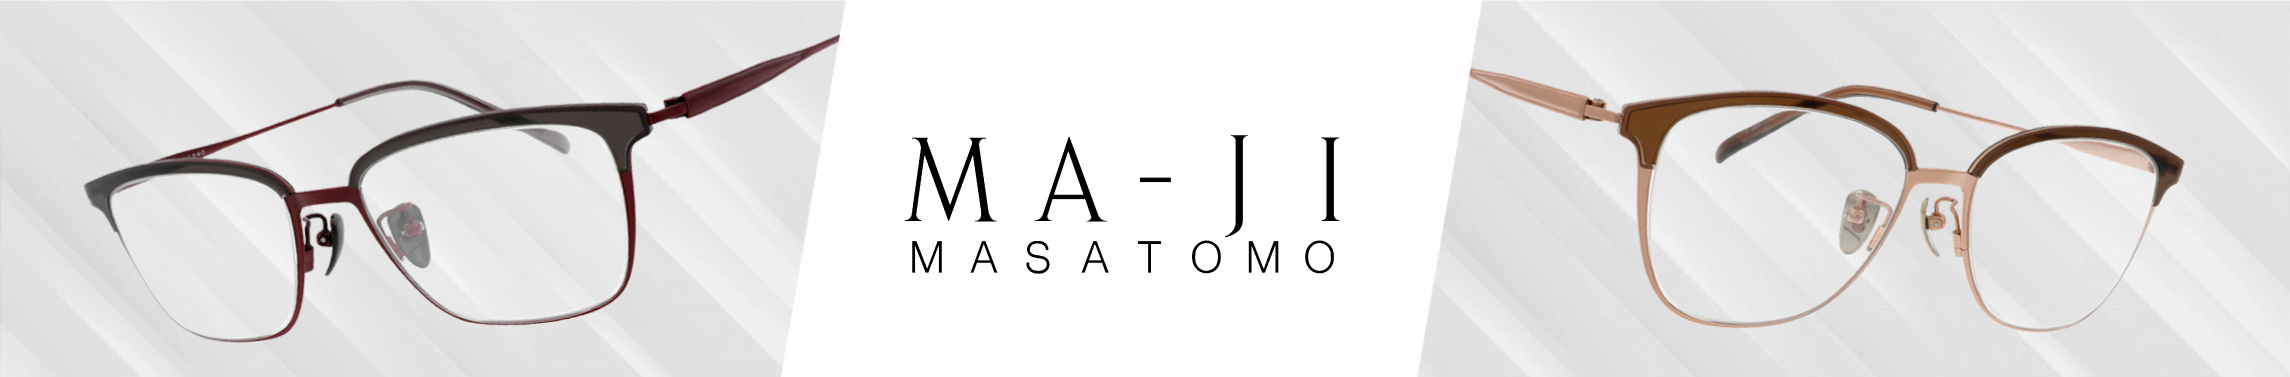 MA-JI Masatomo